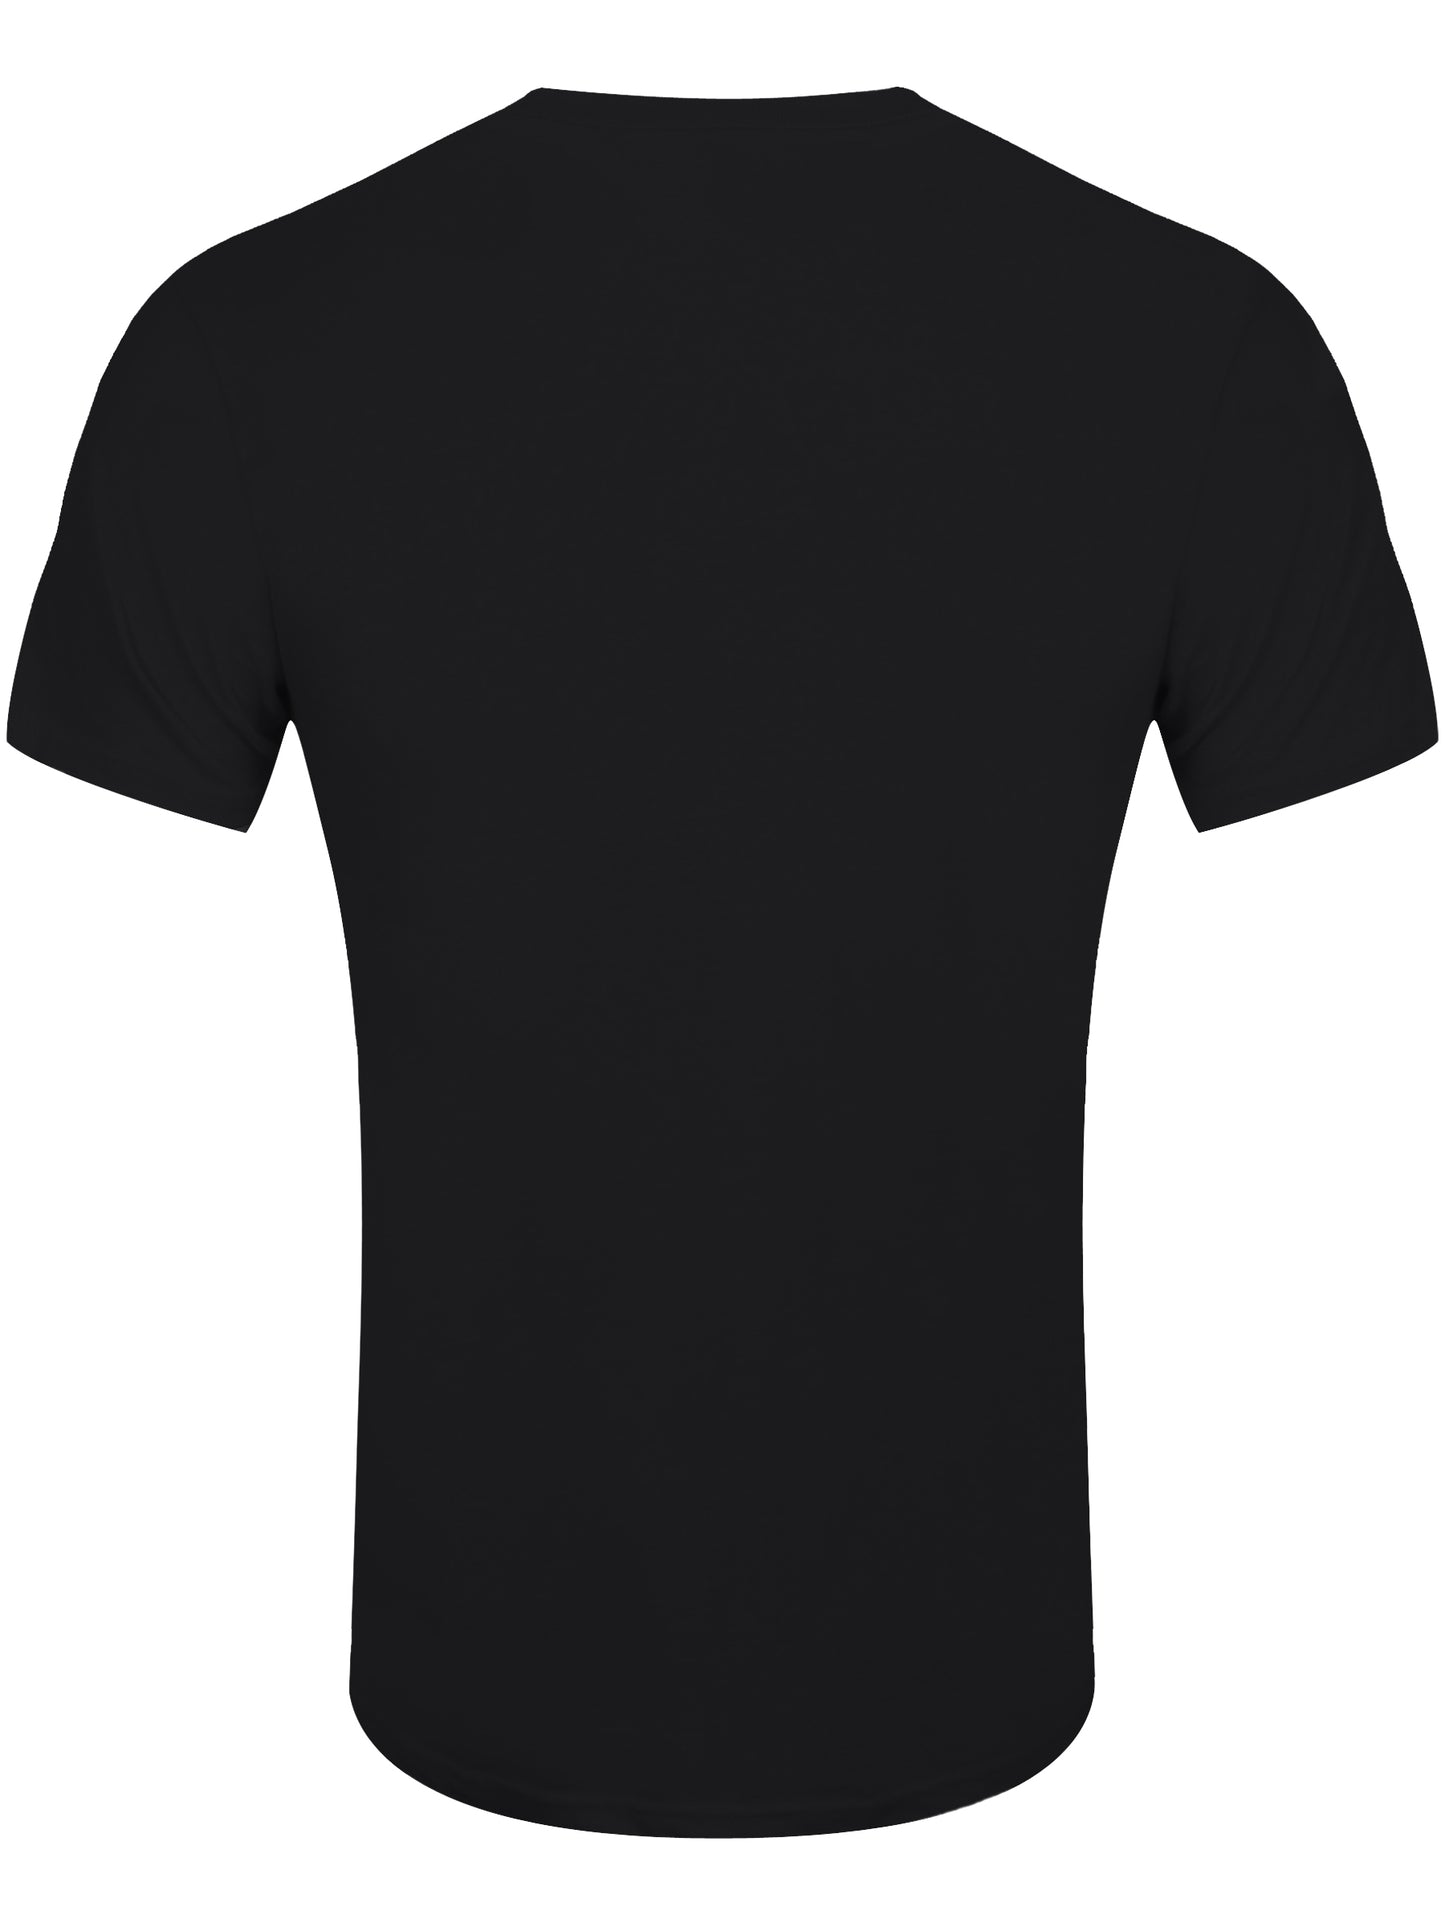 Beatles Abbey Road Silhouette Men's Black T-Shirt